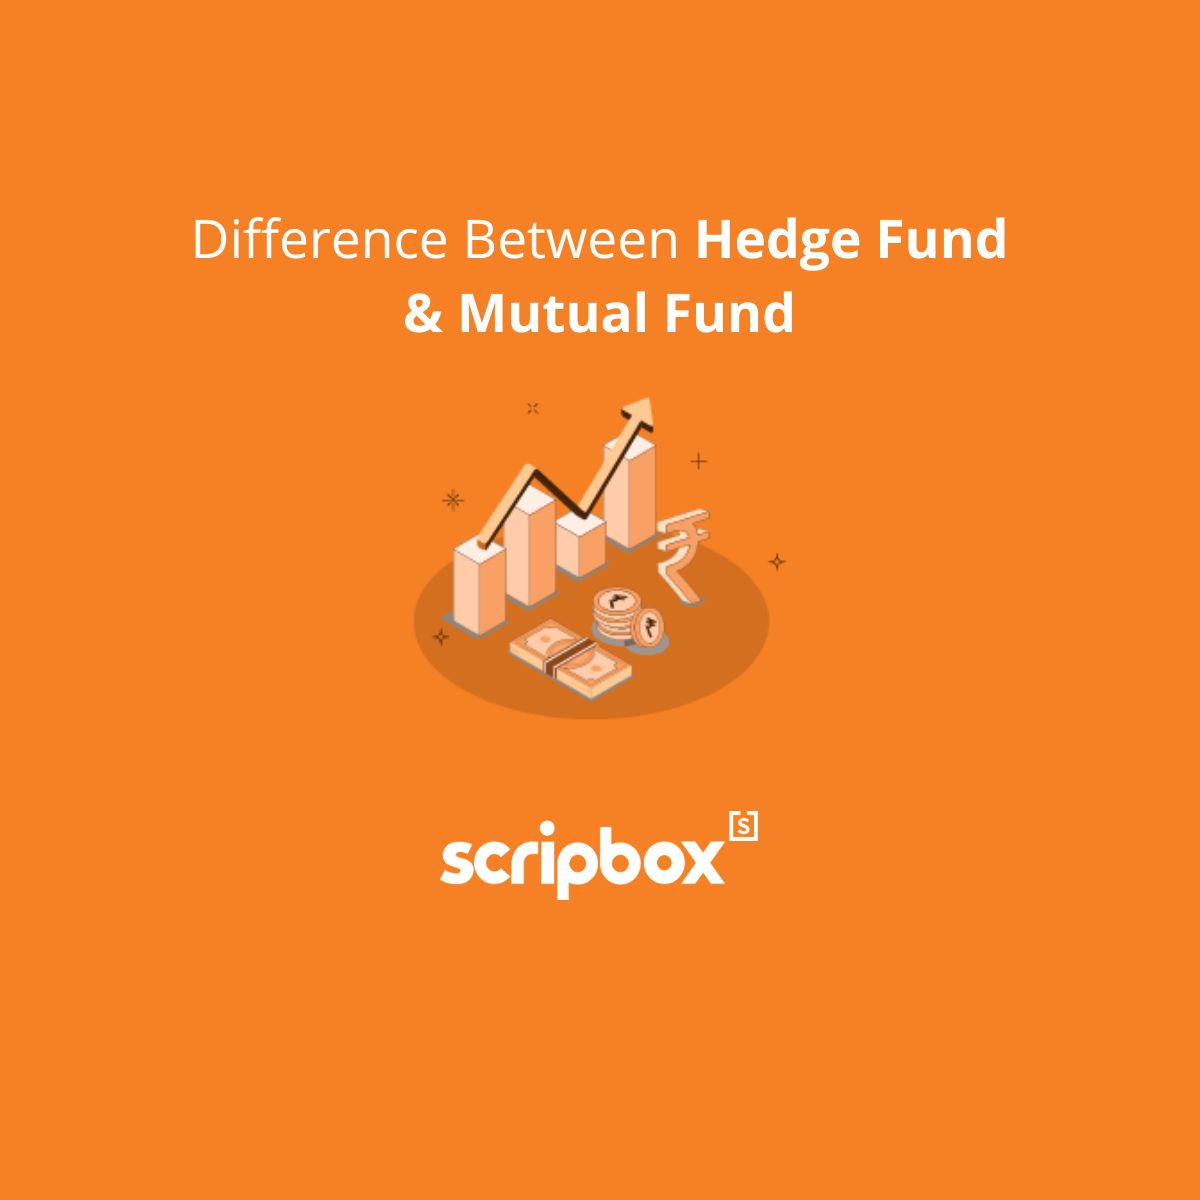 hedge fund vs mutual fund